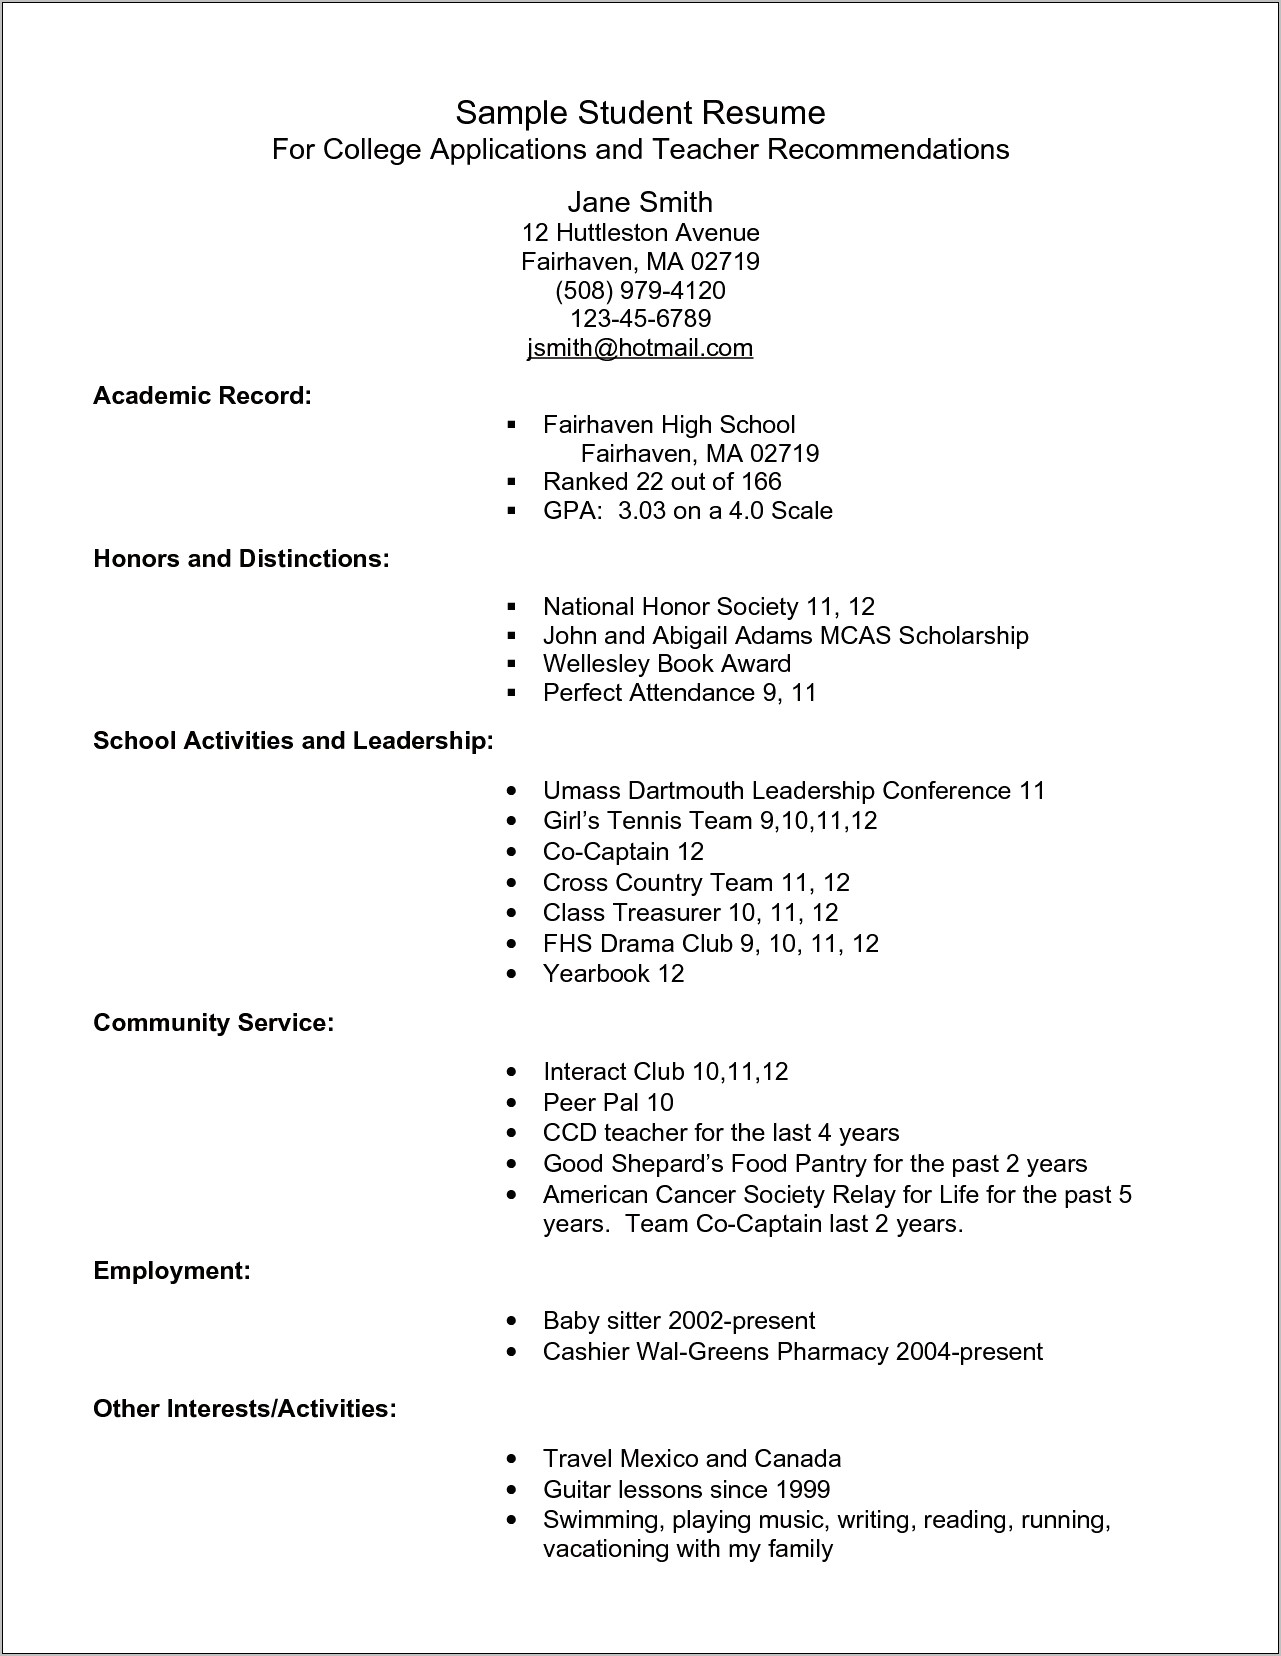 Sample Resume For National Honor Society